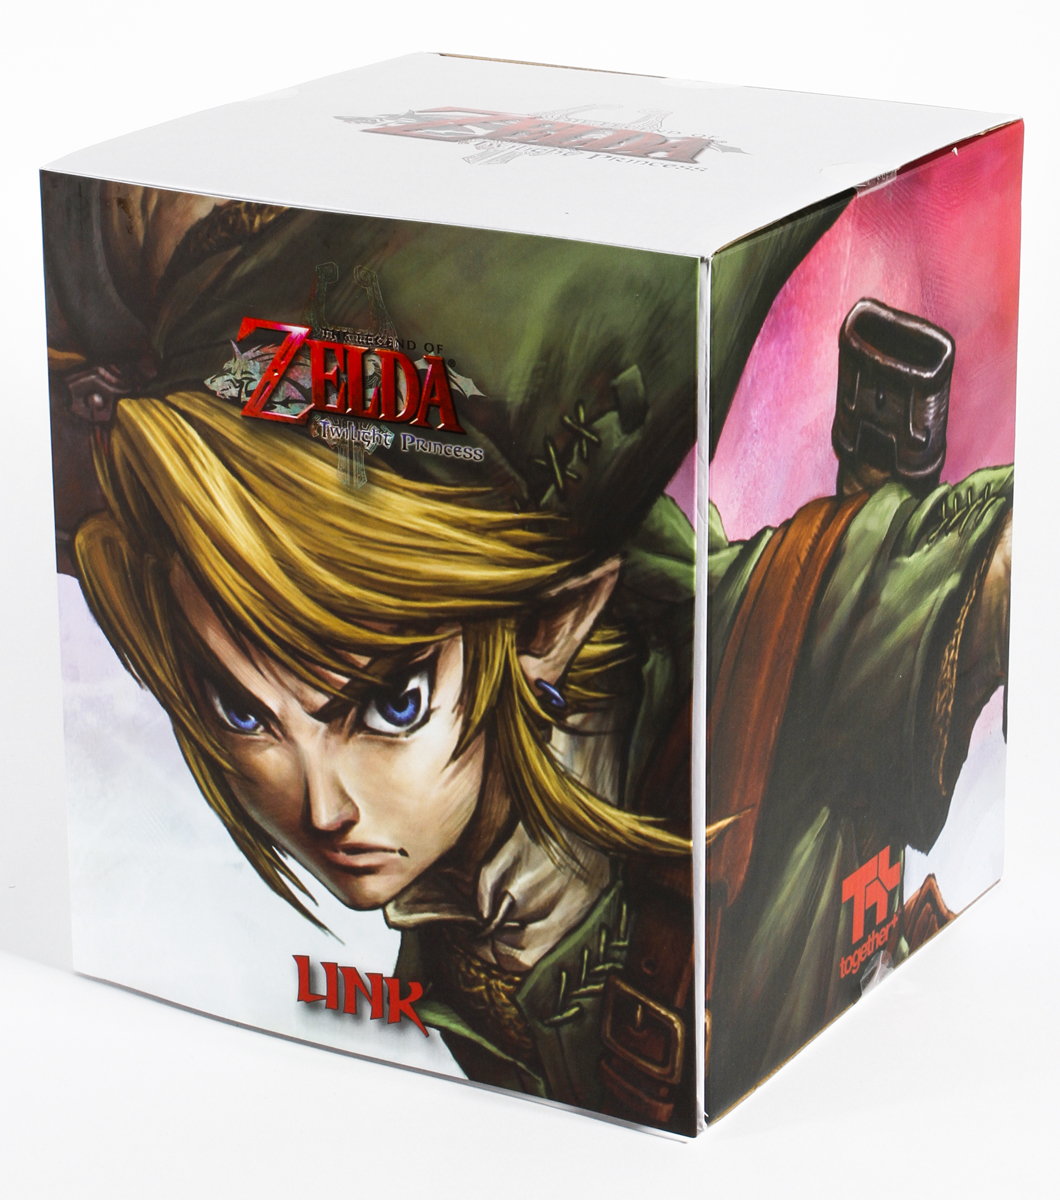 Legend of Zelda Link Statue PVC 26cm